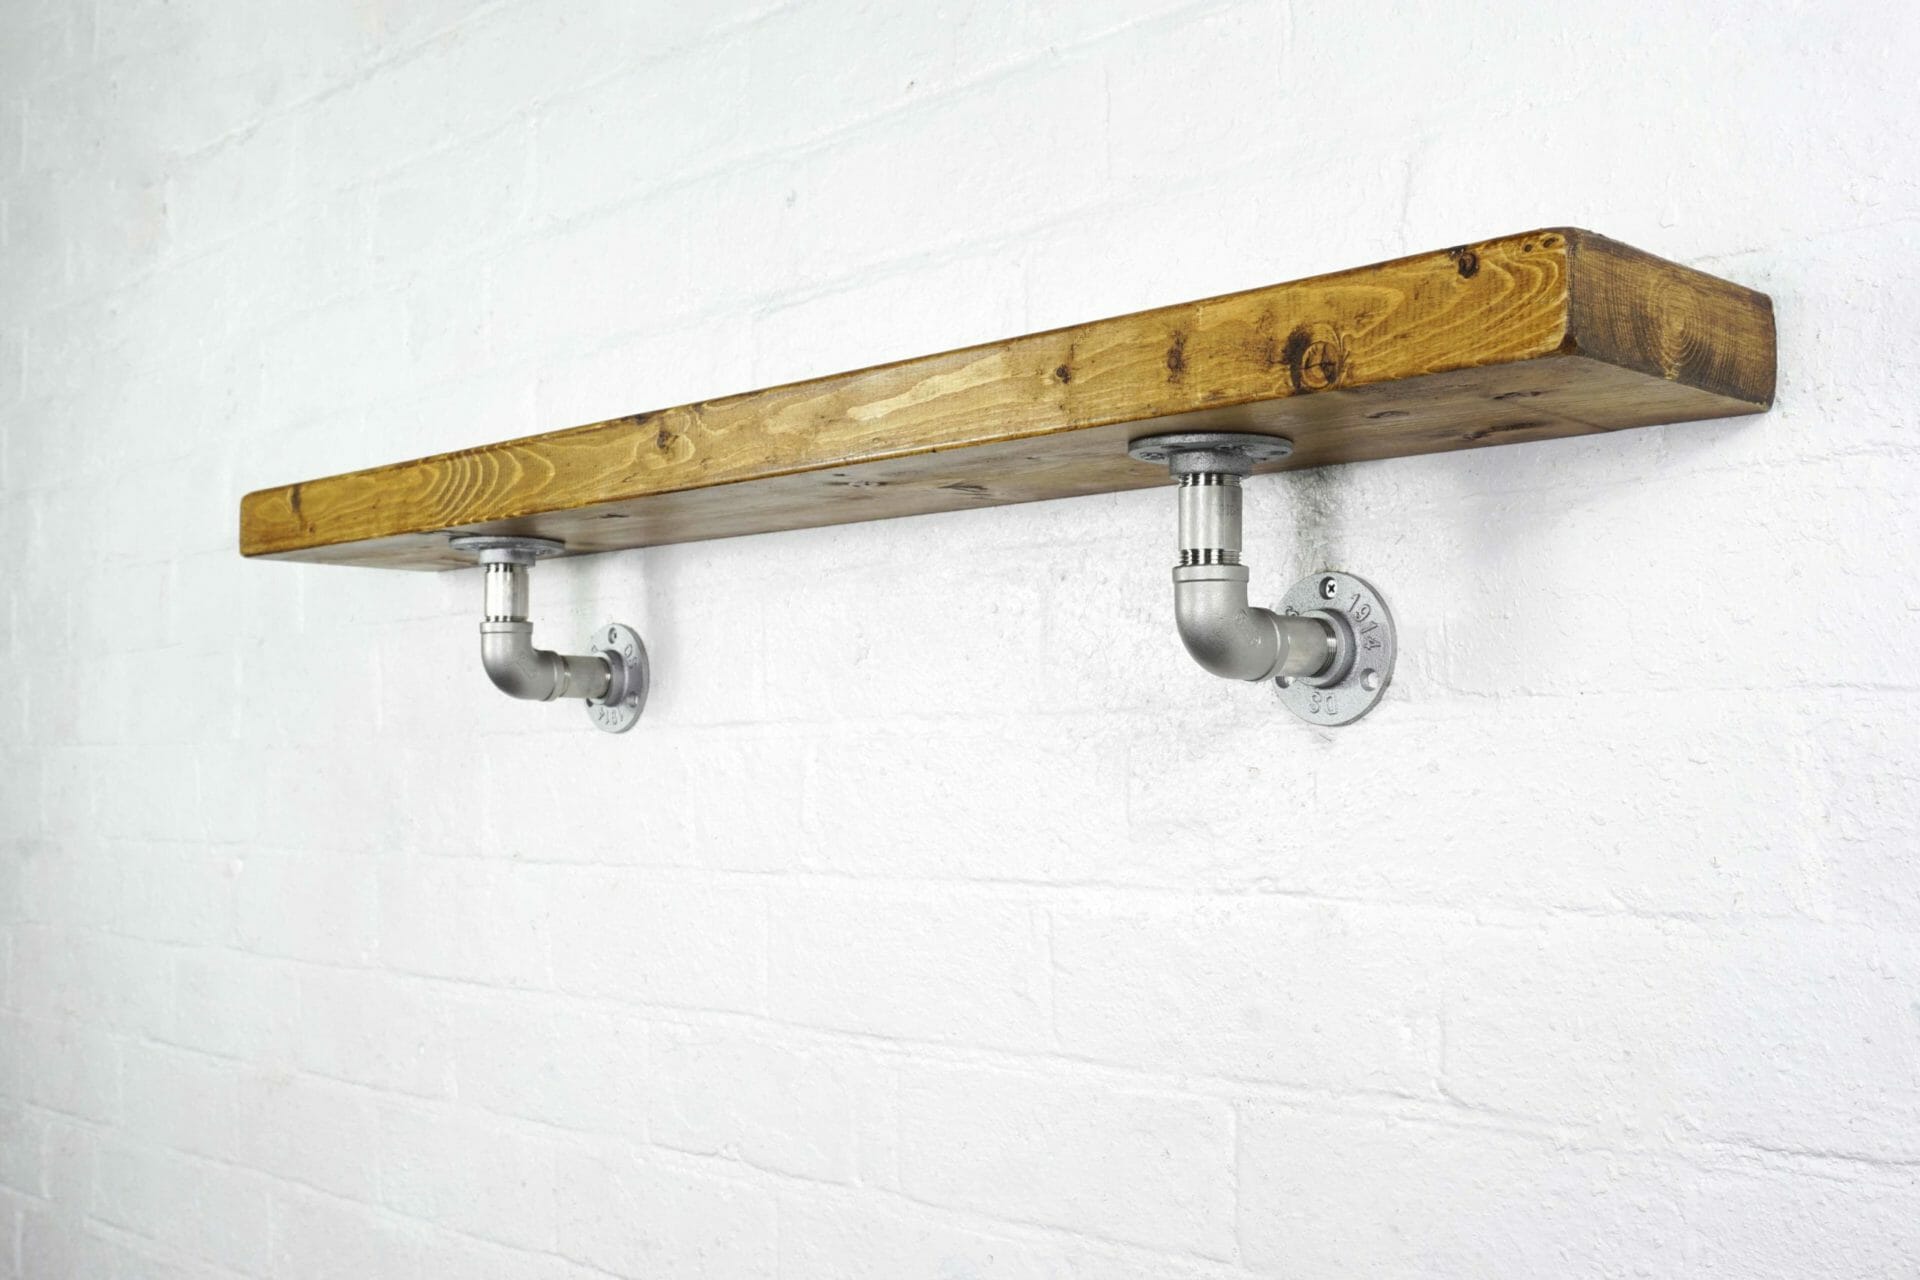 Stainless steel industrial pipe shelving brackets with reclaimed wood scaffolding board shelf